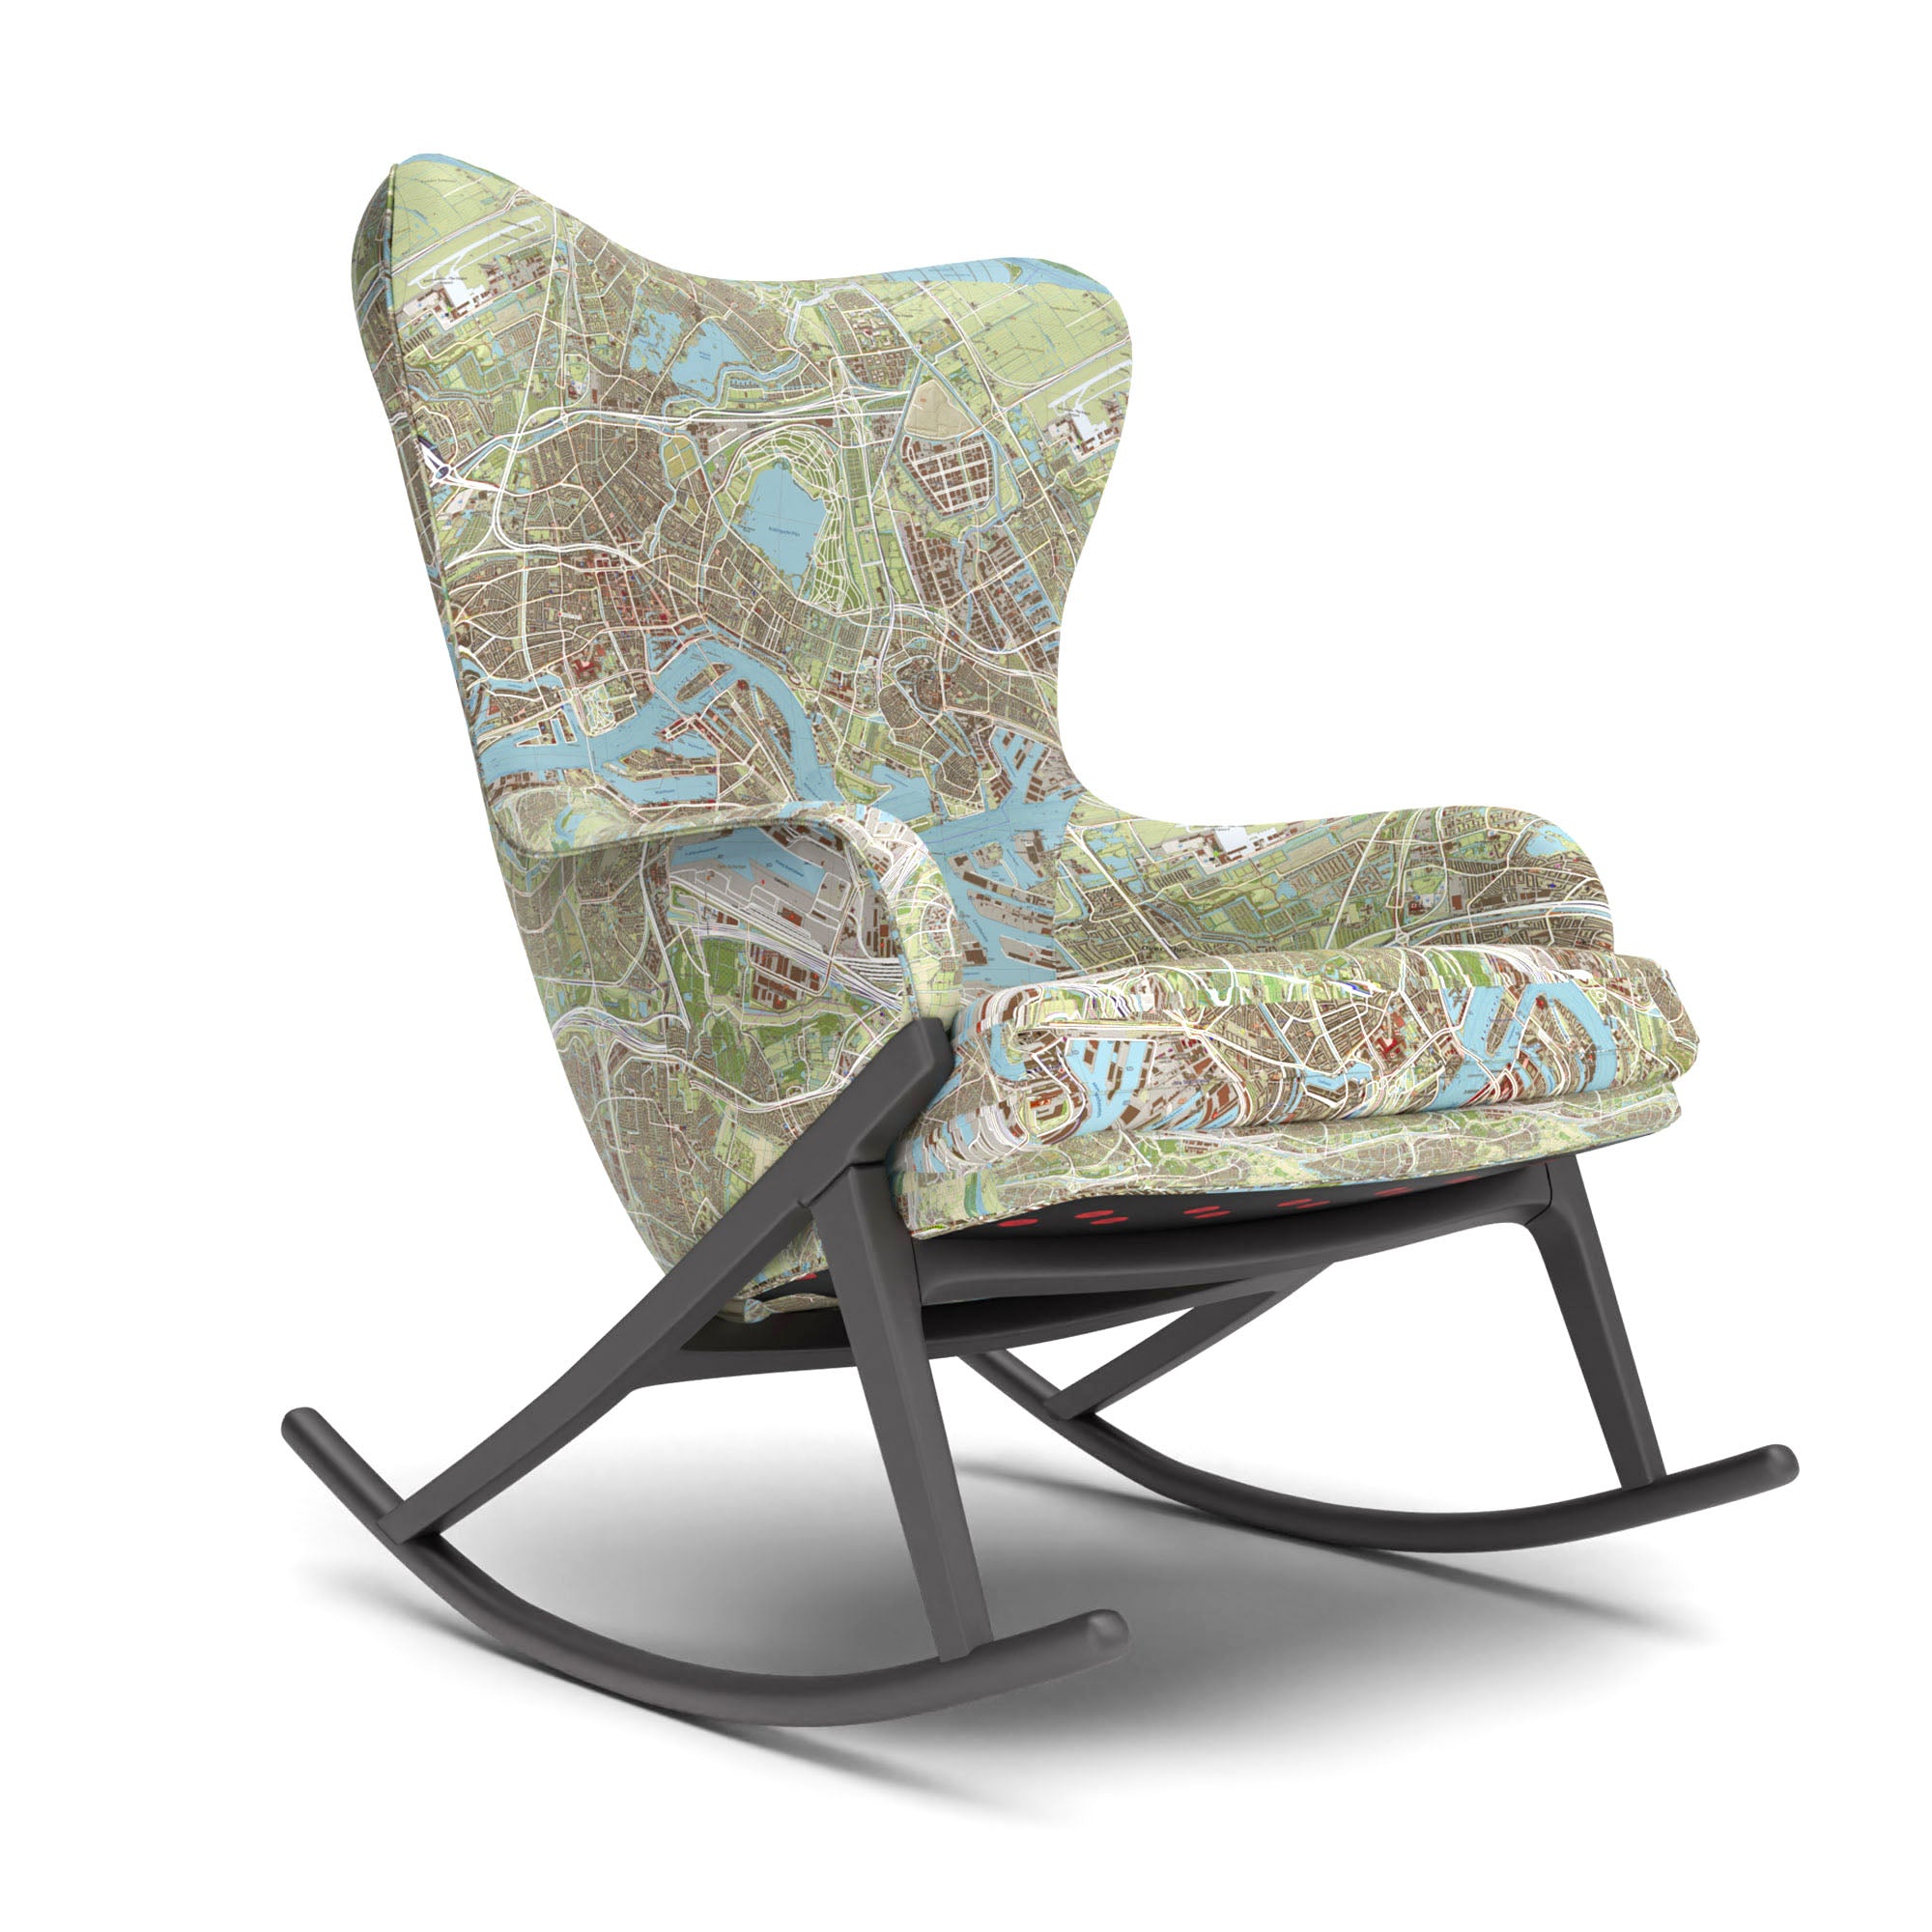 Rotterdam Map Rocking Chair